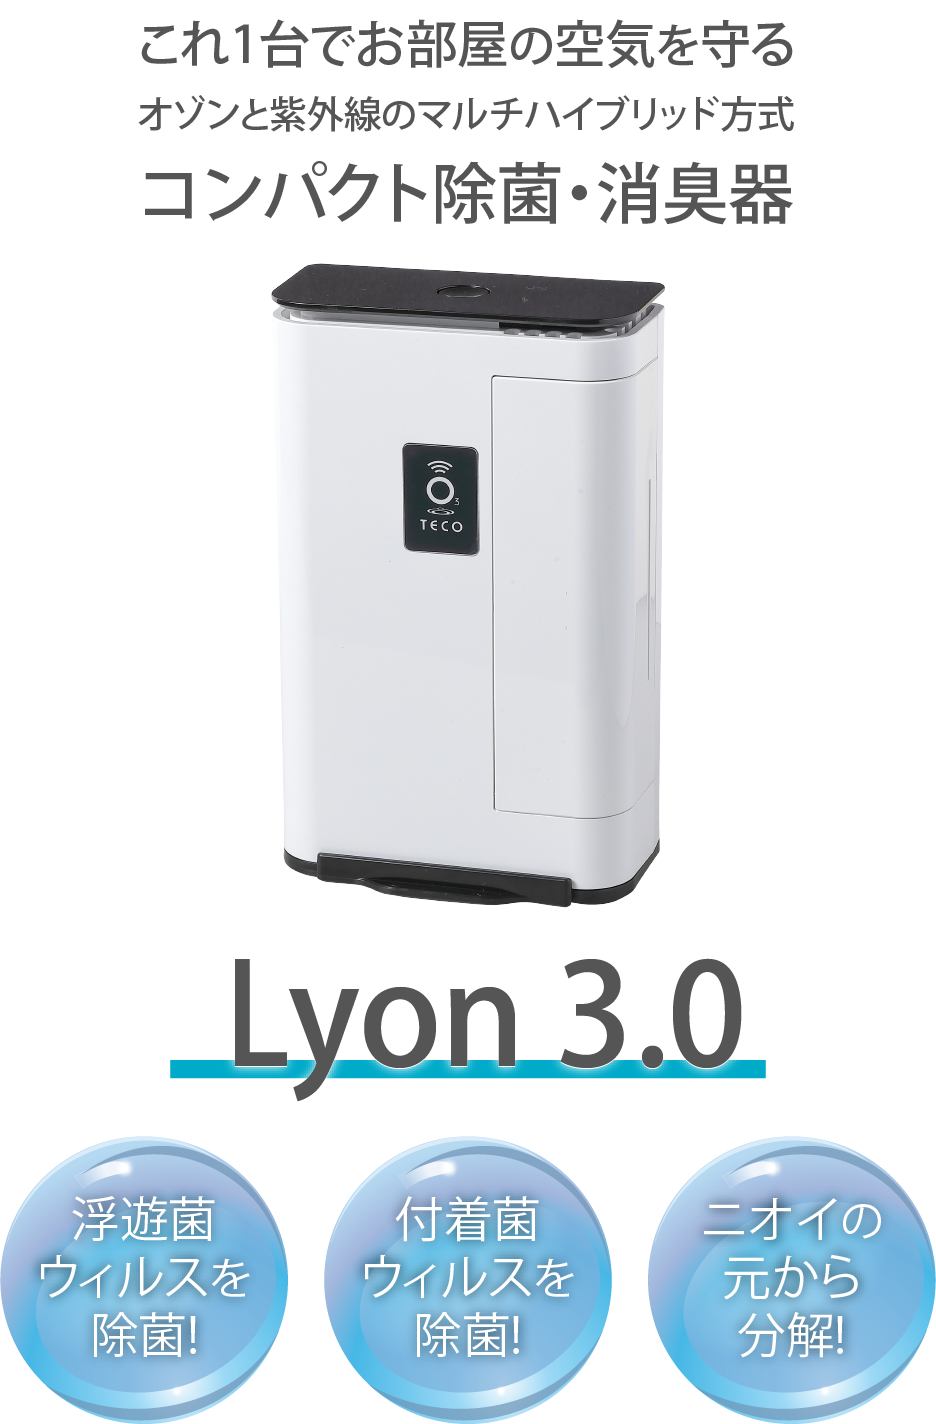 Lyon3.0 - HULL, INC.